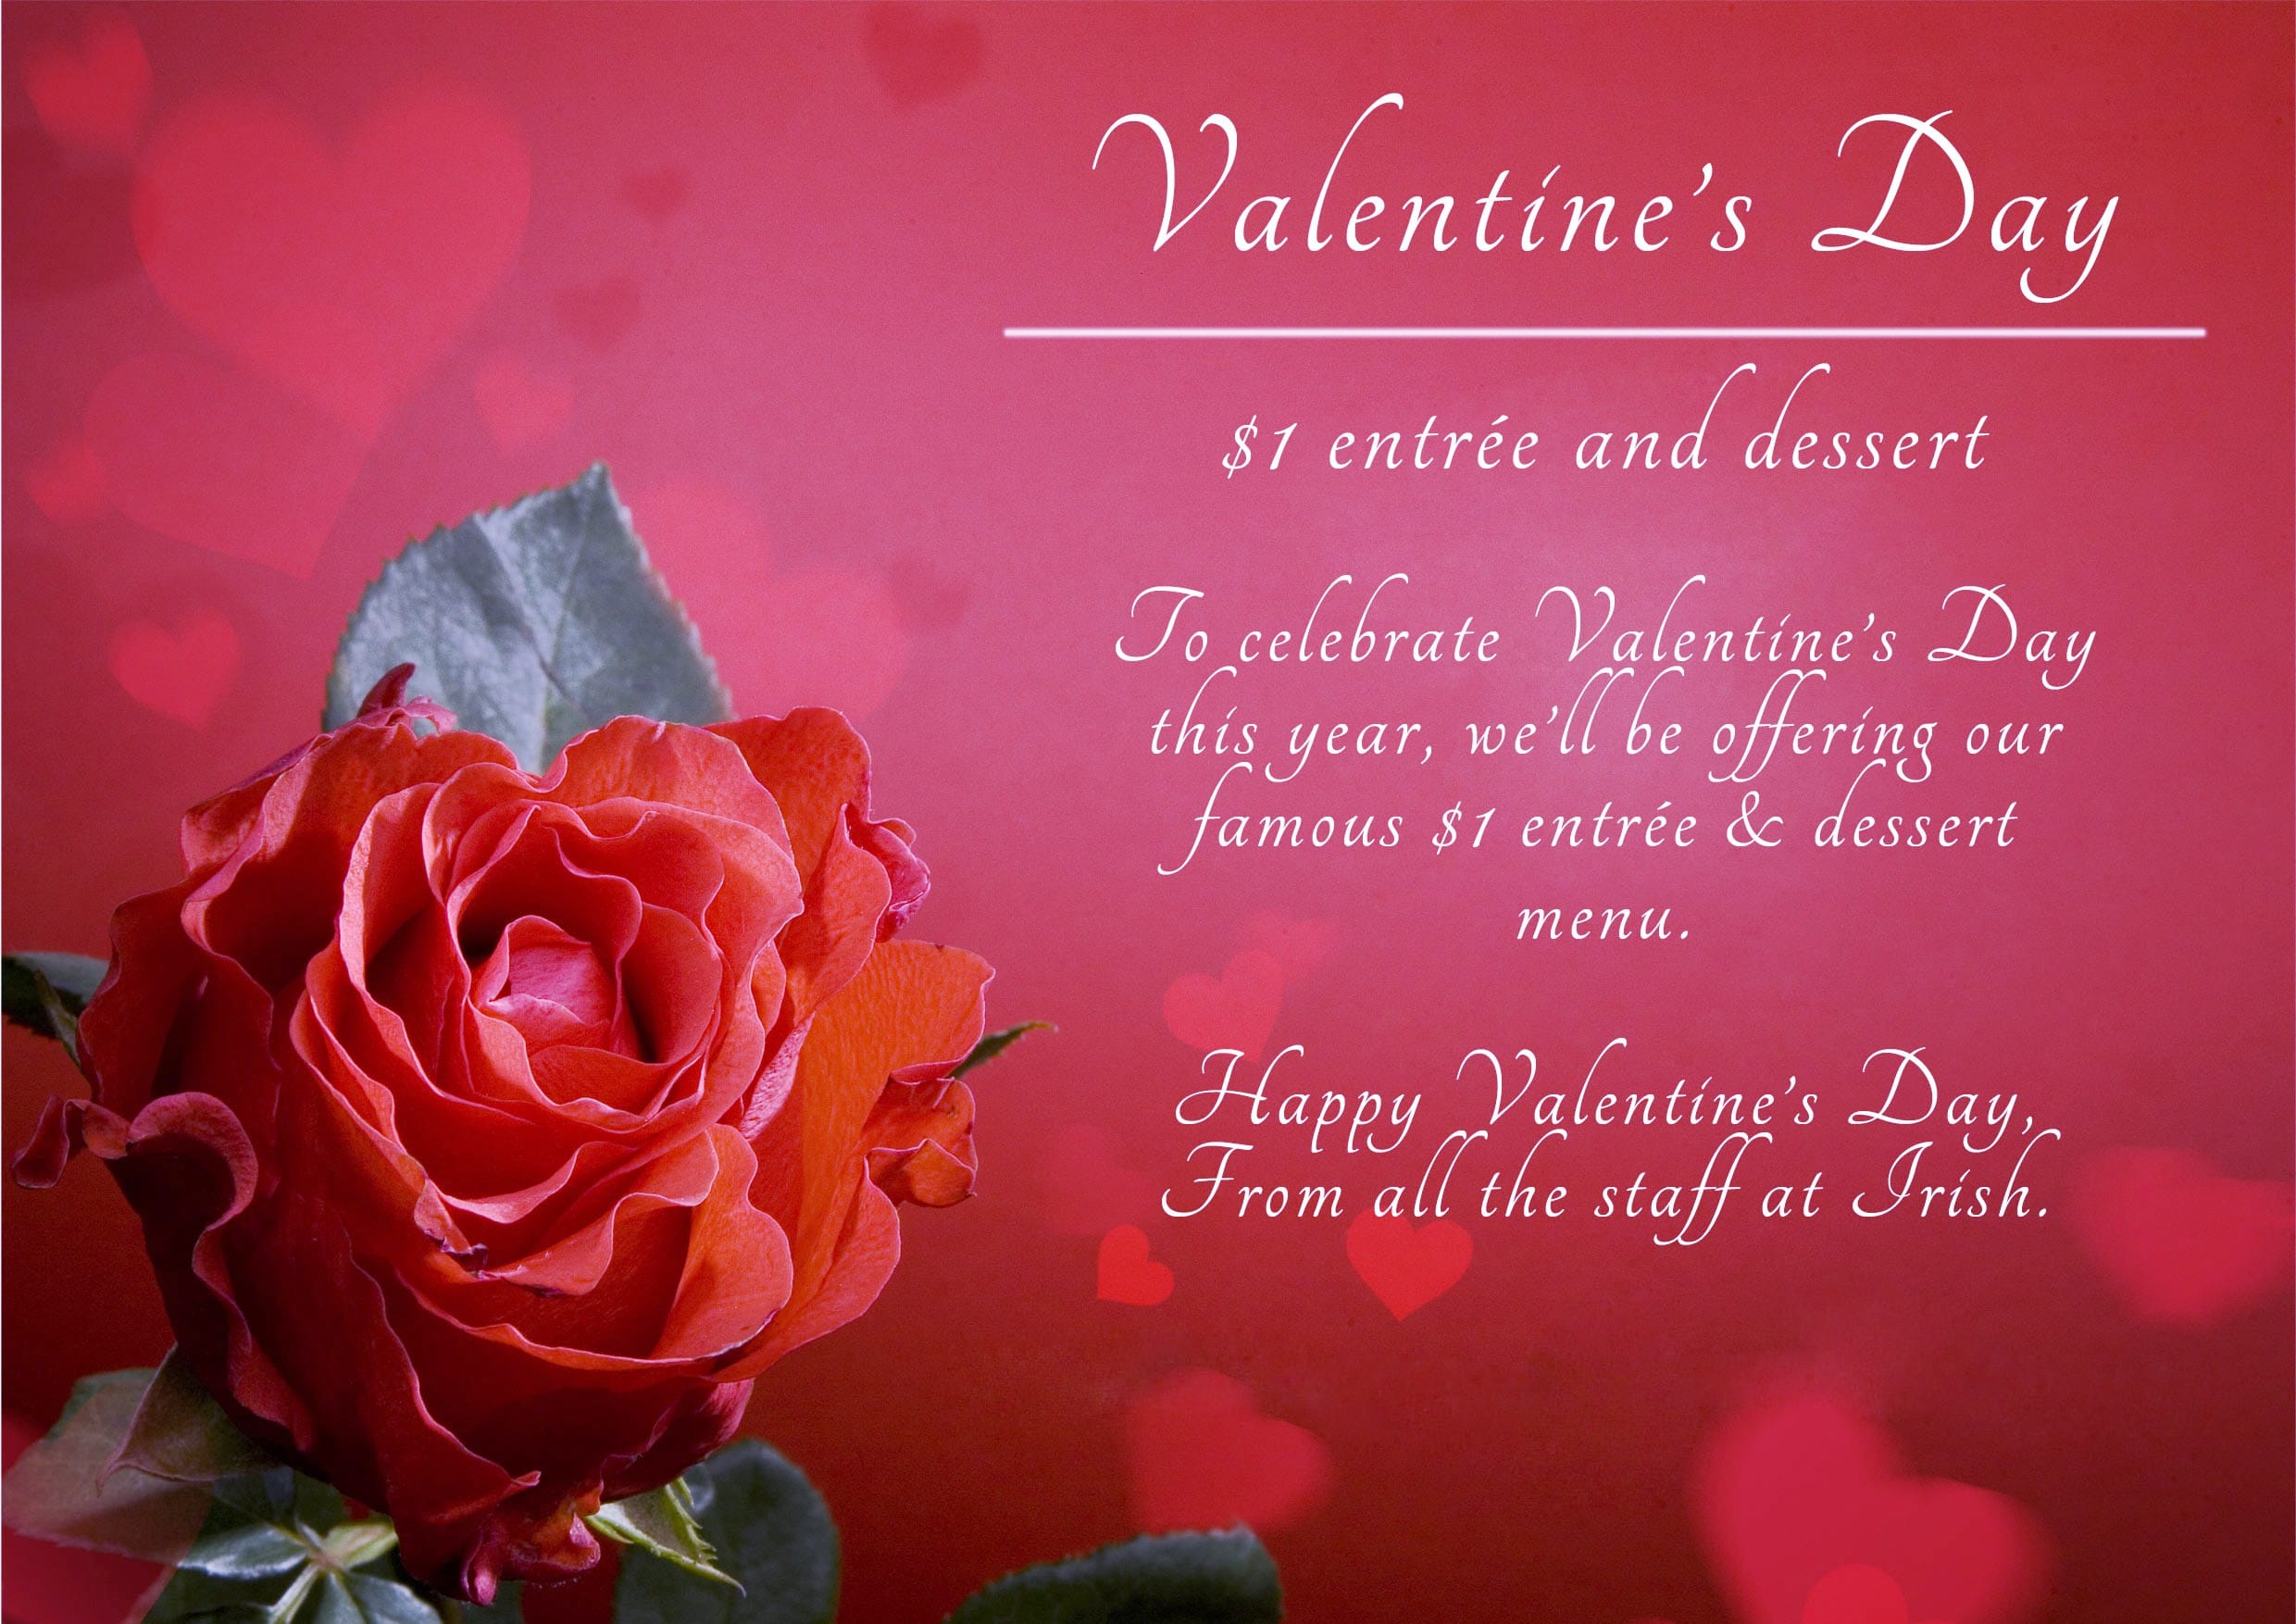 Valentine’s Day wishes HD Image